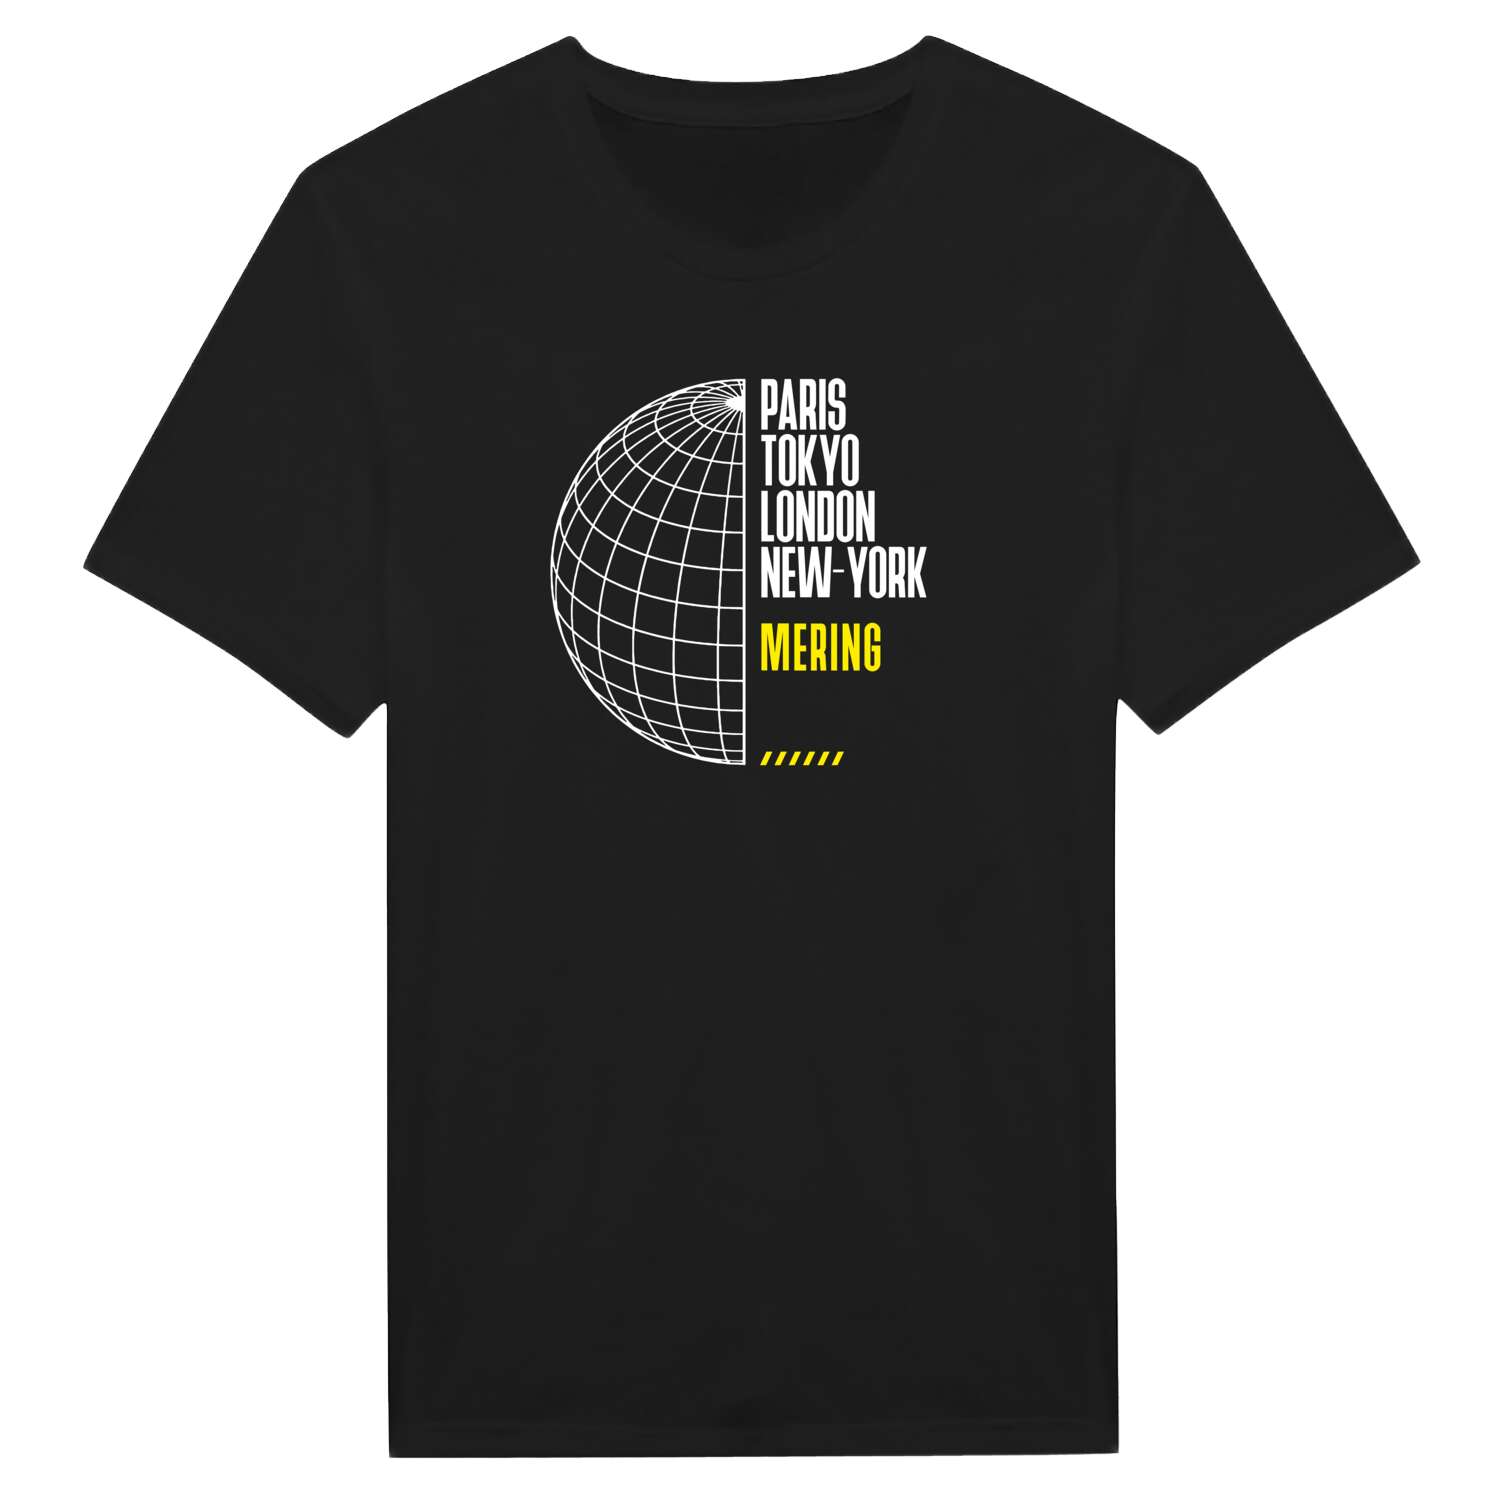 Mering T-Shirt »Paris Tokyo London«